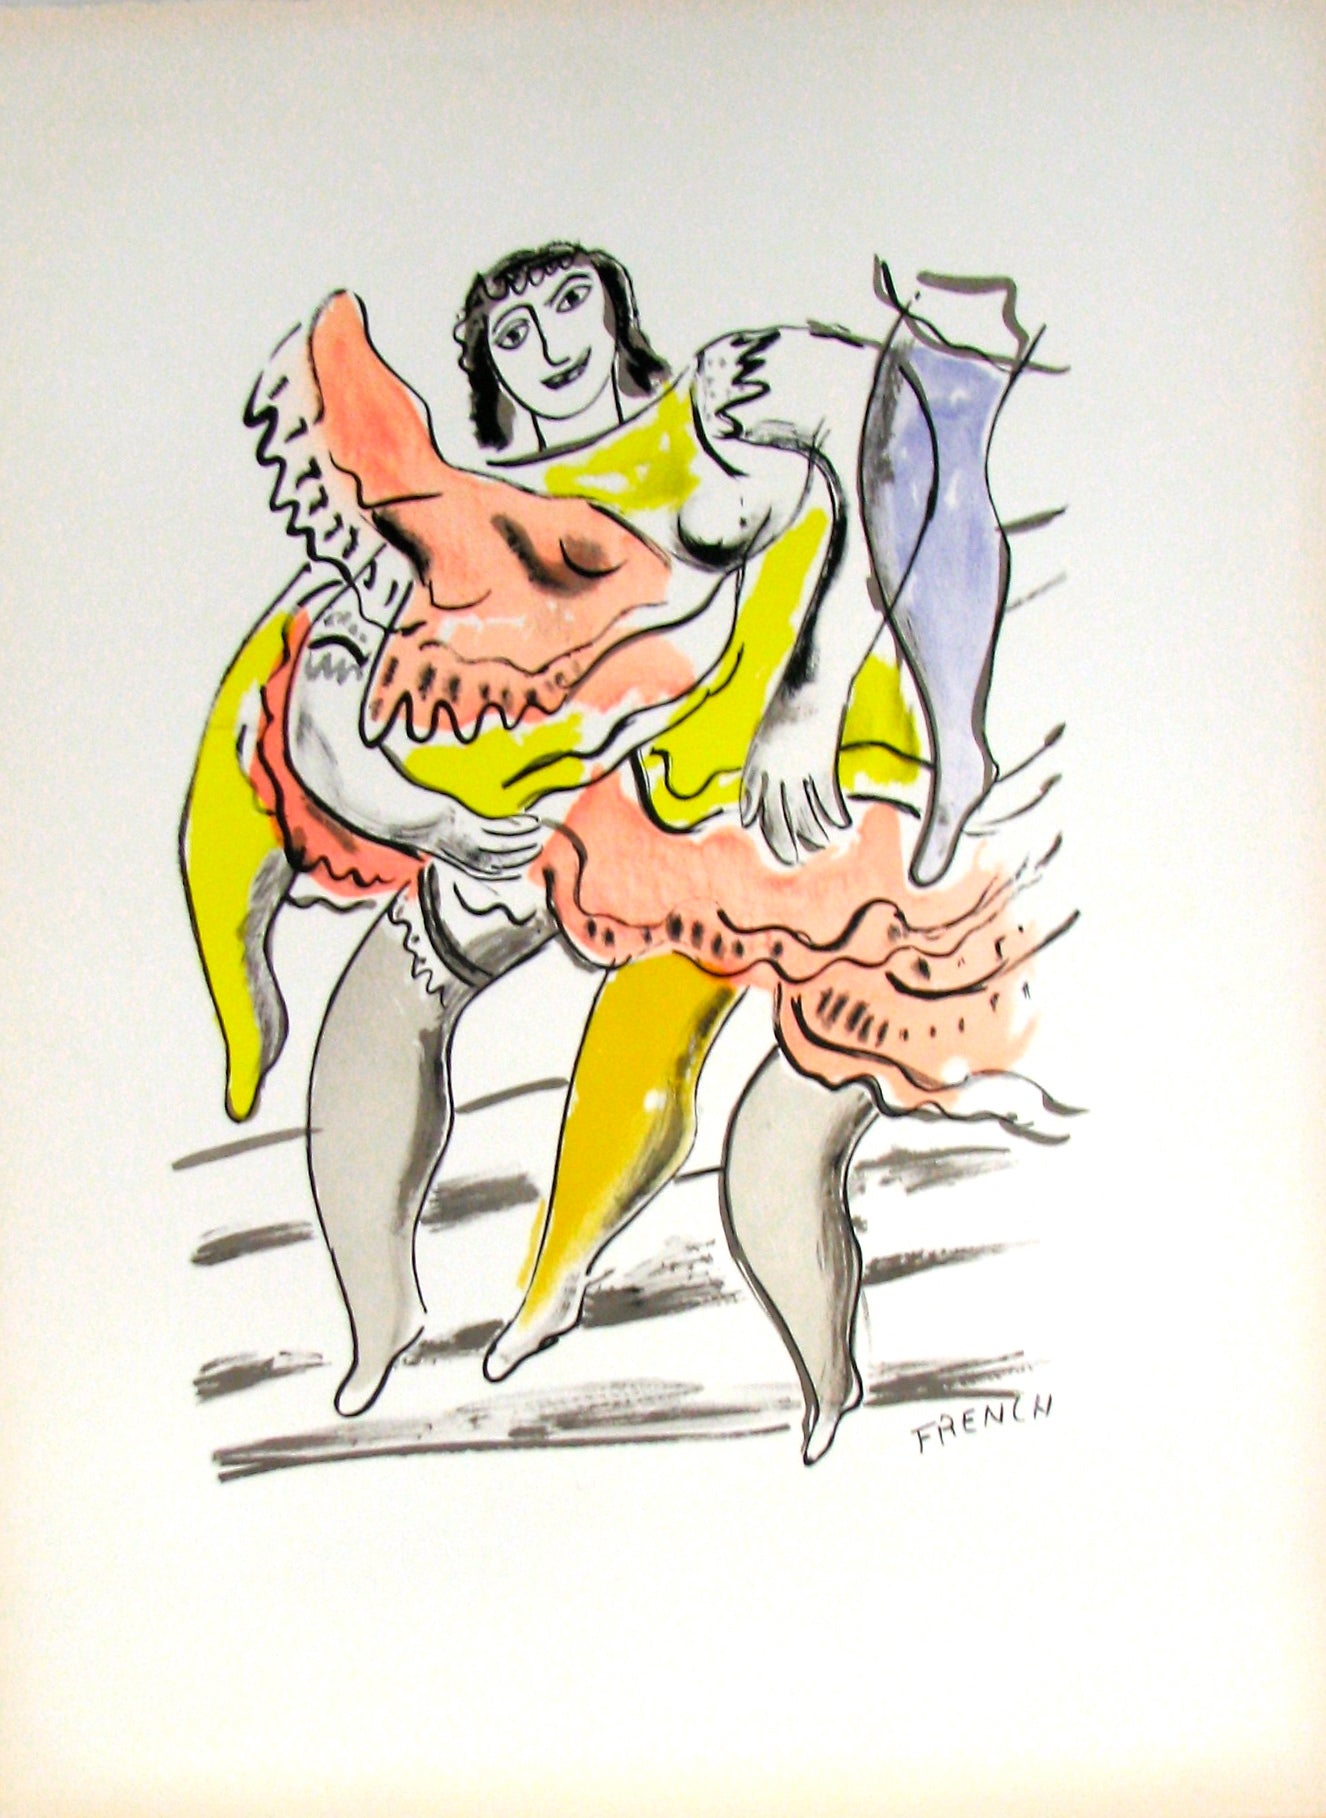 Le French Cancan - "La Ville" (after) Fernand Leger, 1959 - Mourlot Editions - Fine_Art - Poster - Lithograph - Wall Art - Vintage - Prints - Original